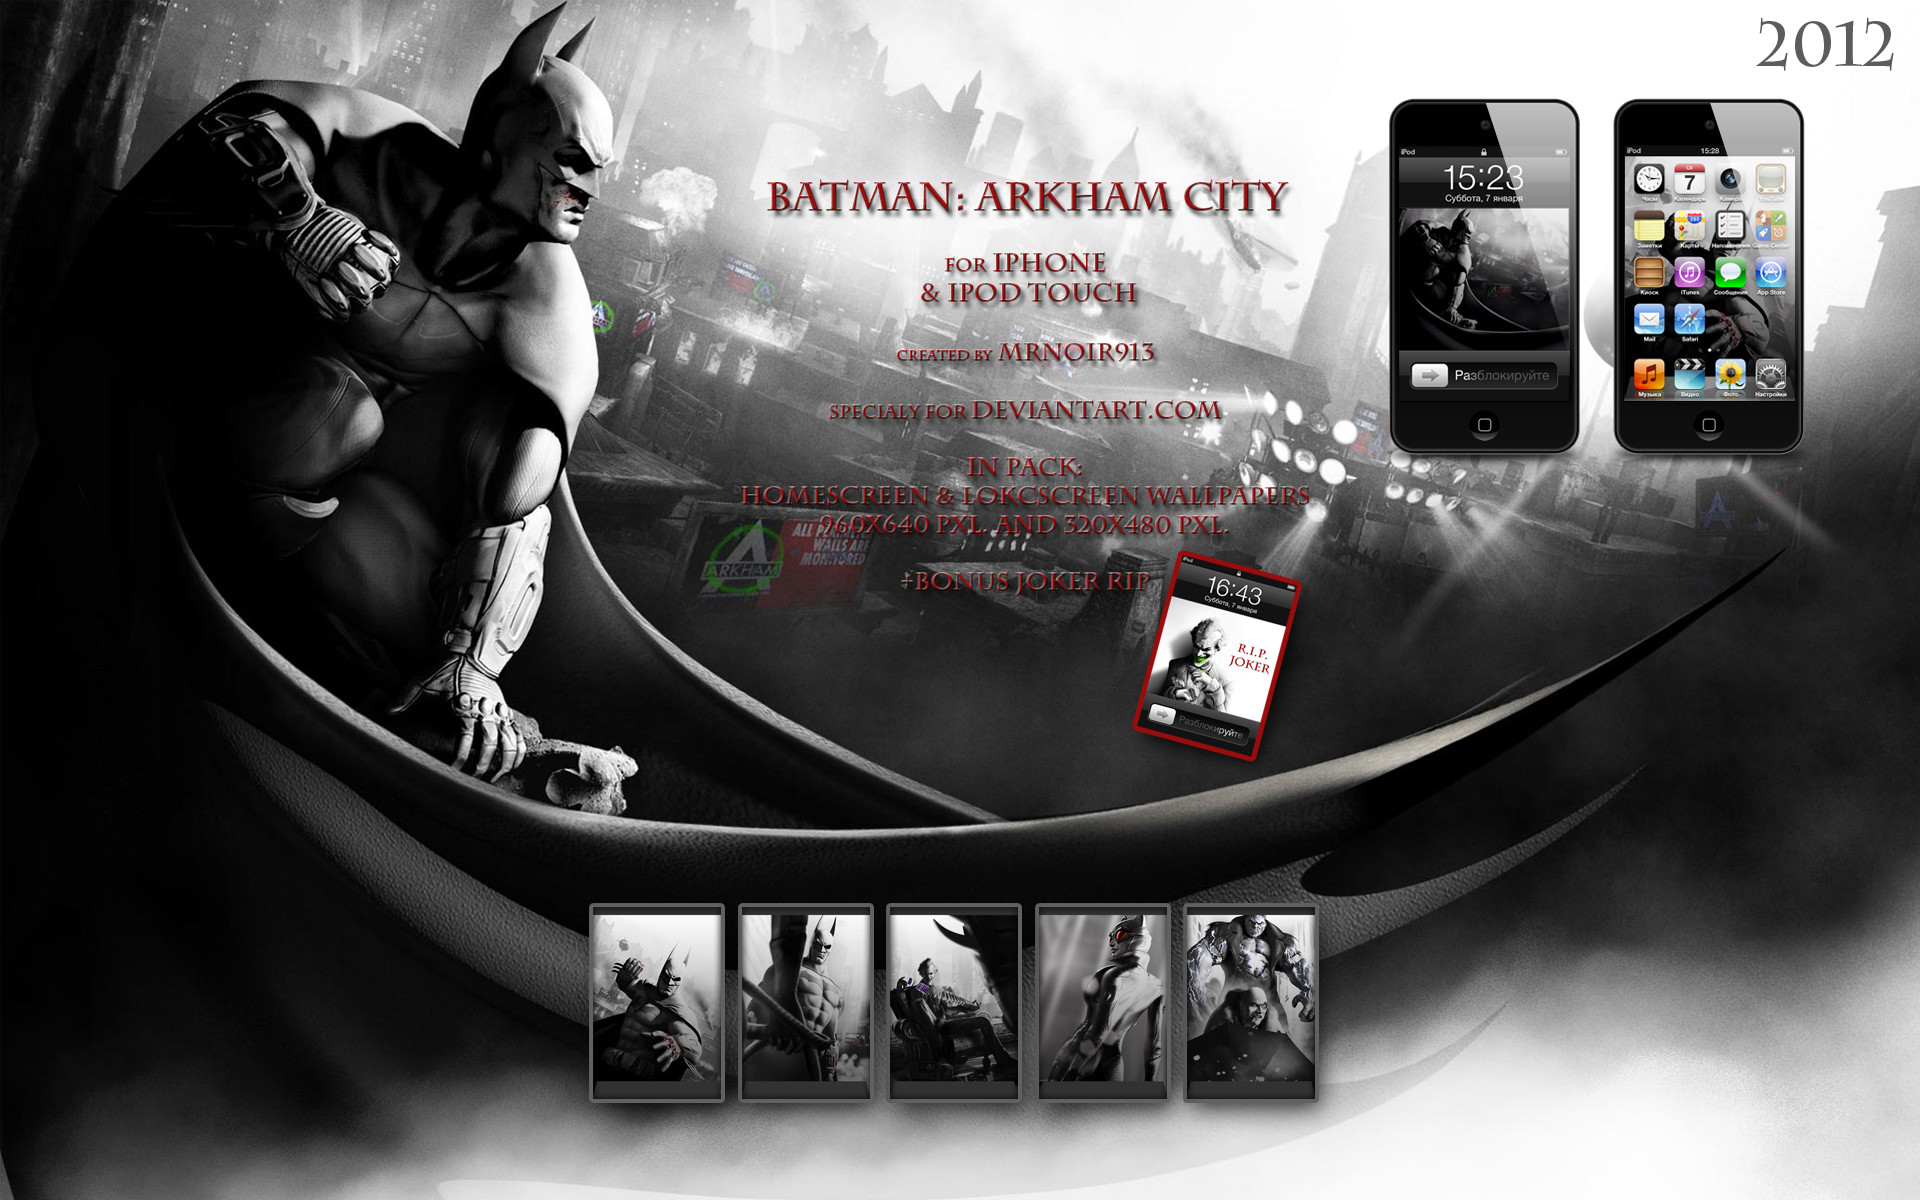 1920x1200 ... Batman - Arkham City wallpapers by MrNoir913